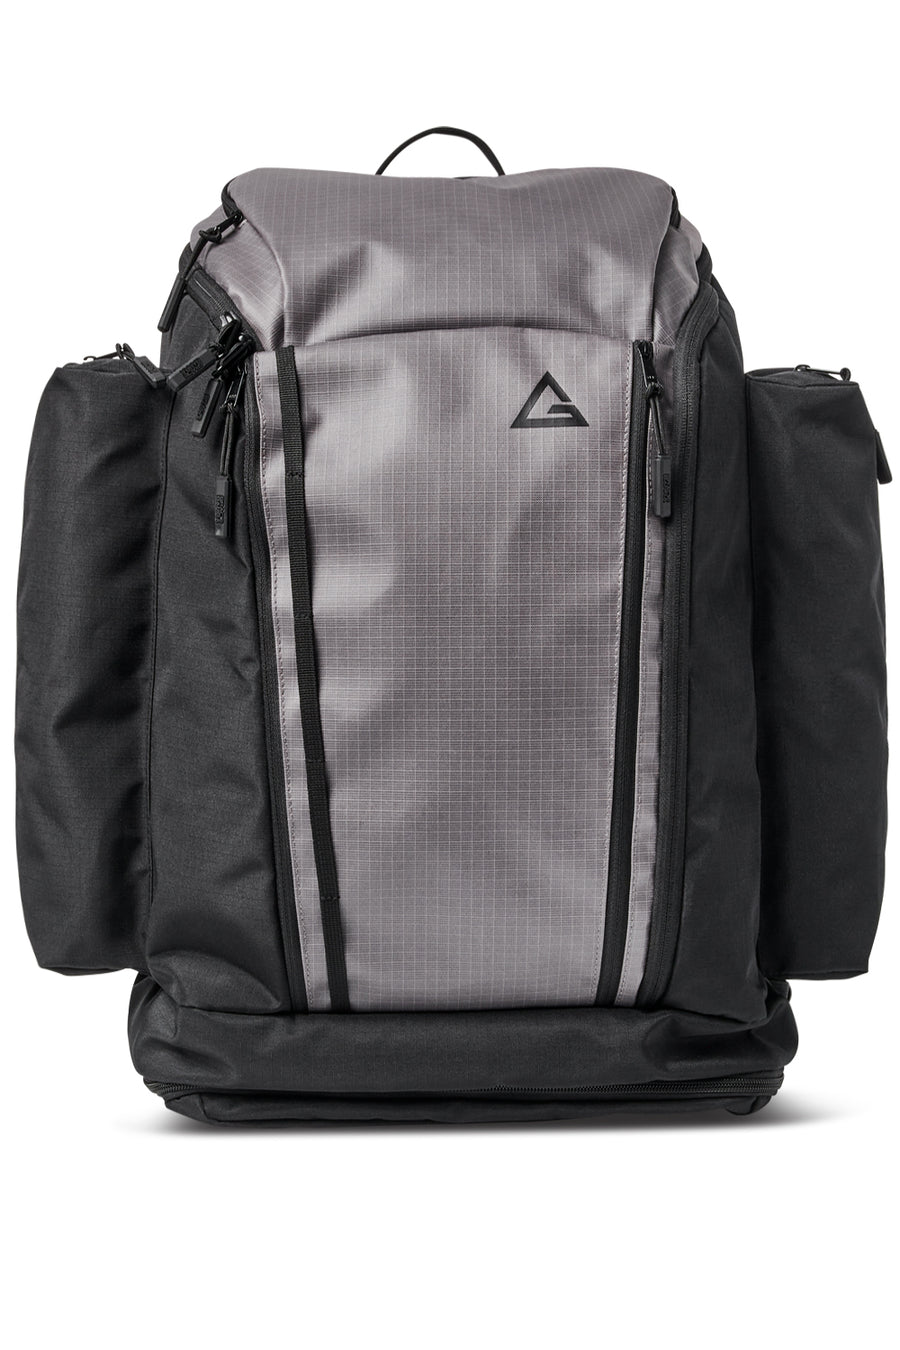 GB Elite Hybrid Backpack - Grey/Black – GB Wear